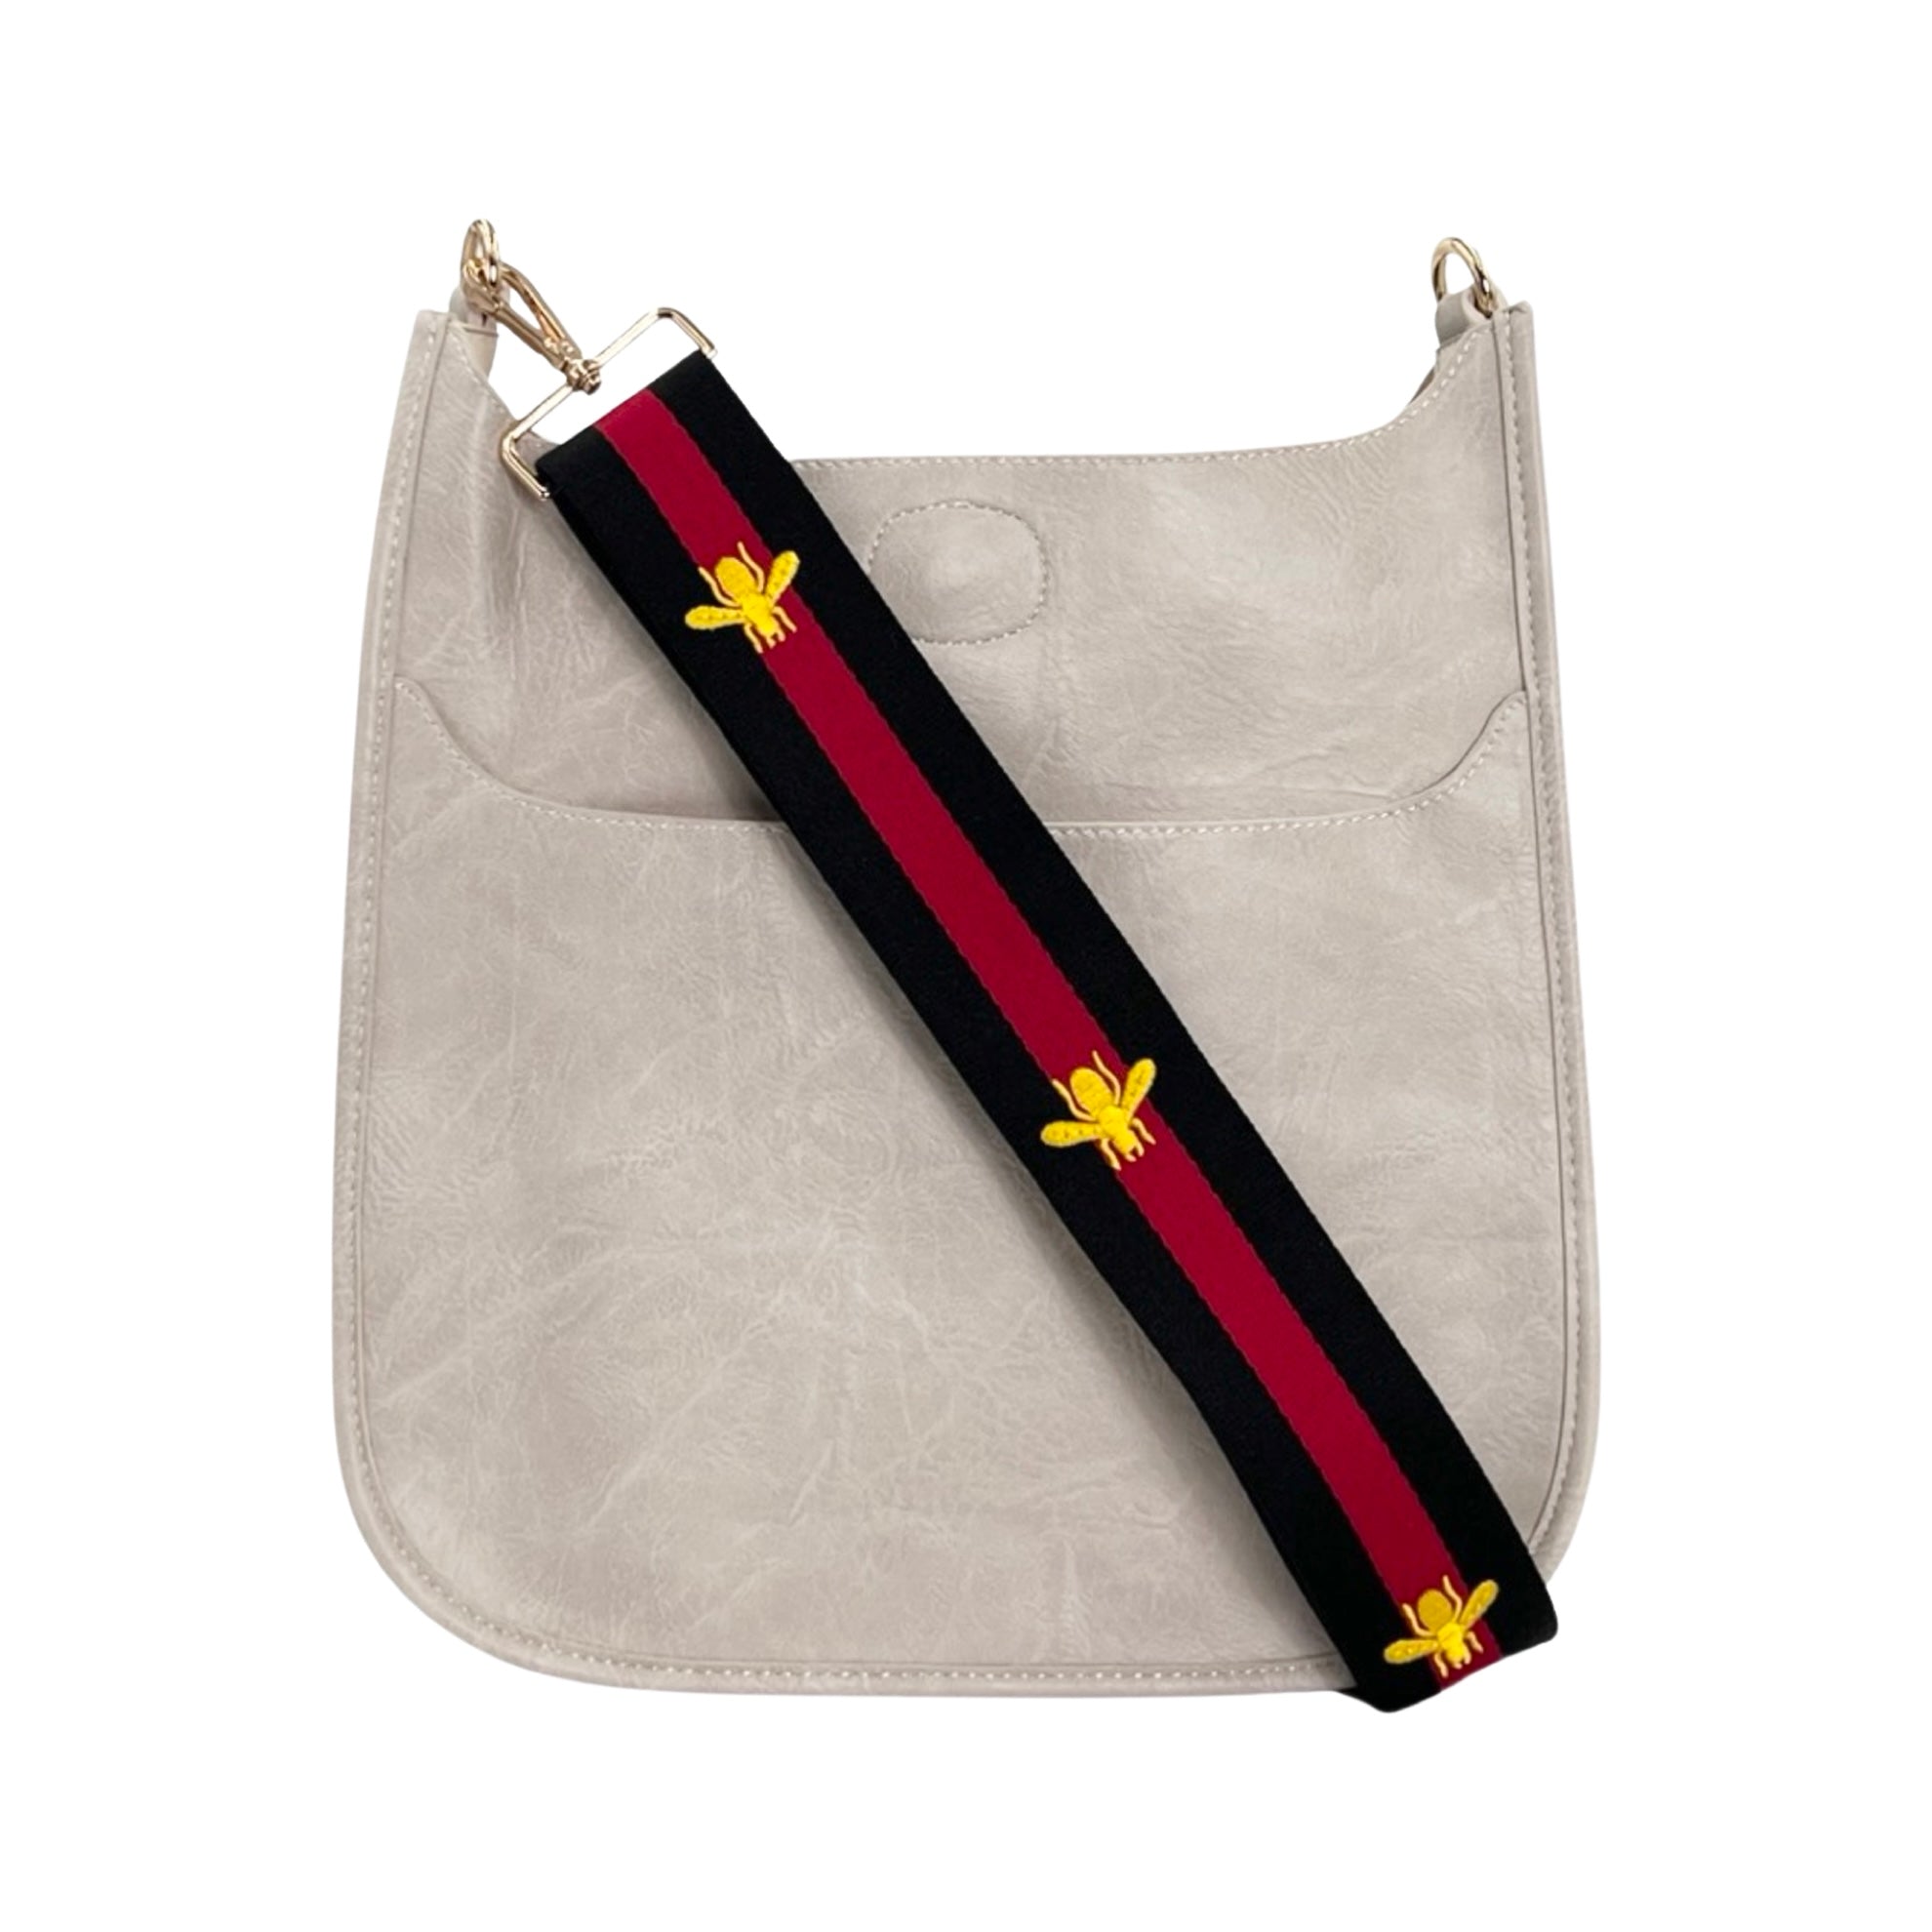 Ahdorned Nicole Large Nylon Crossbody Bag, Women's, Black Red